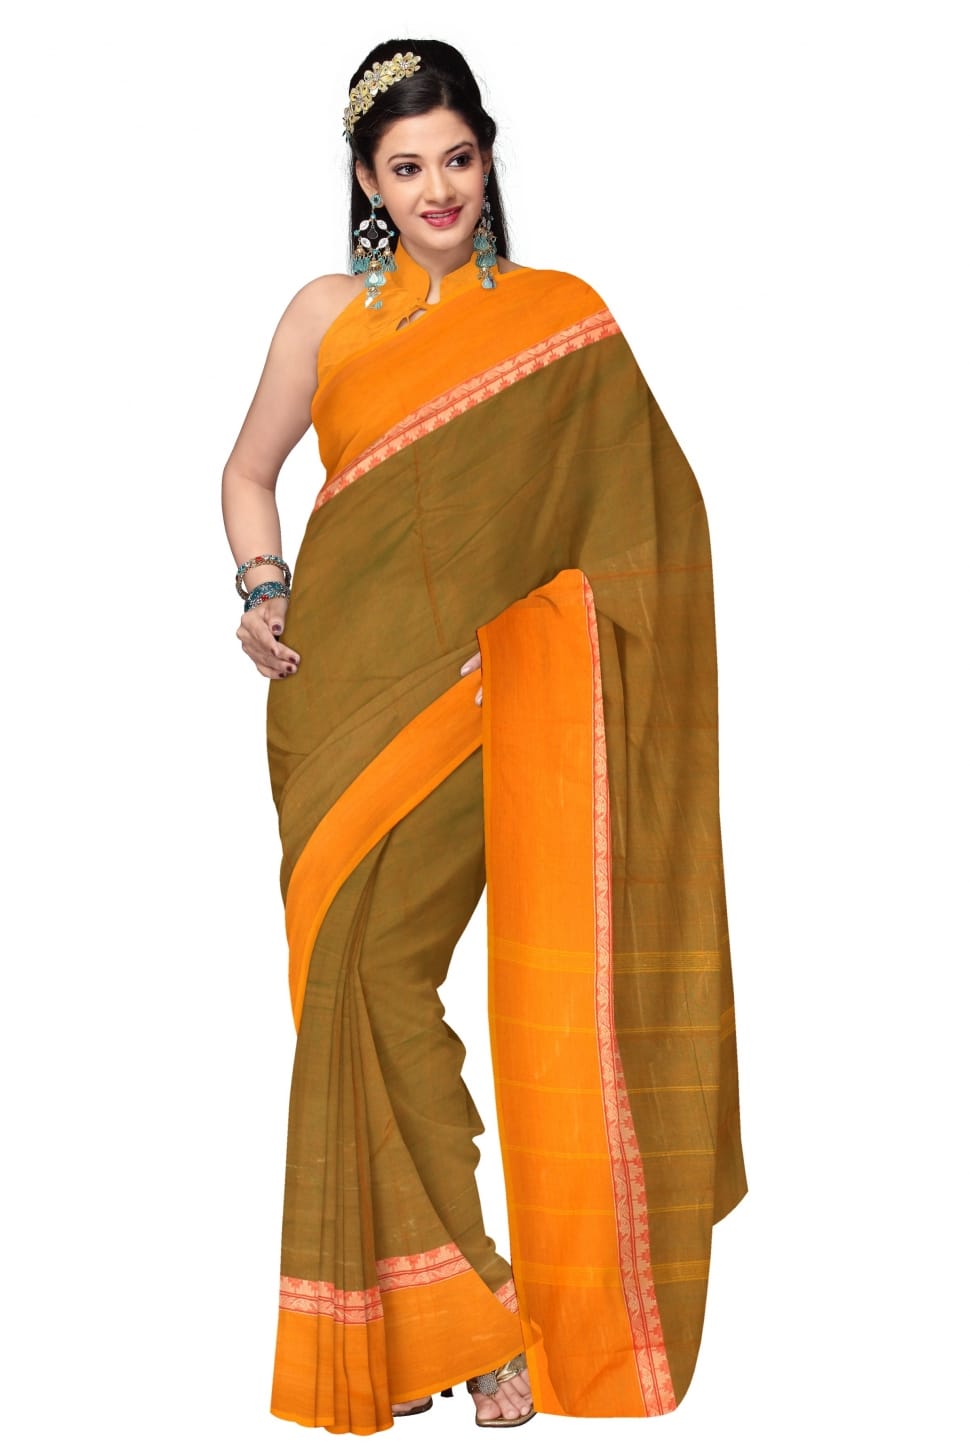 woman's orange and brown salwar kameez preview